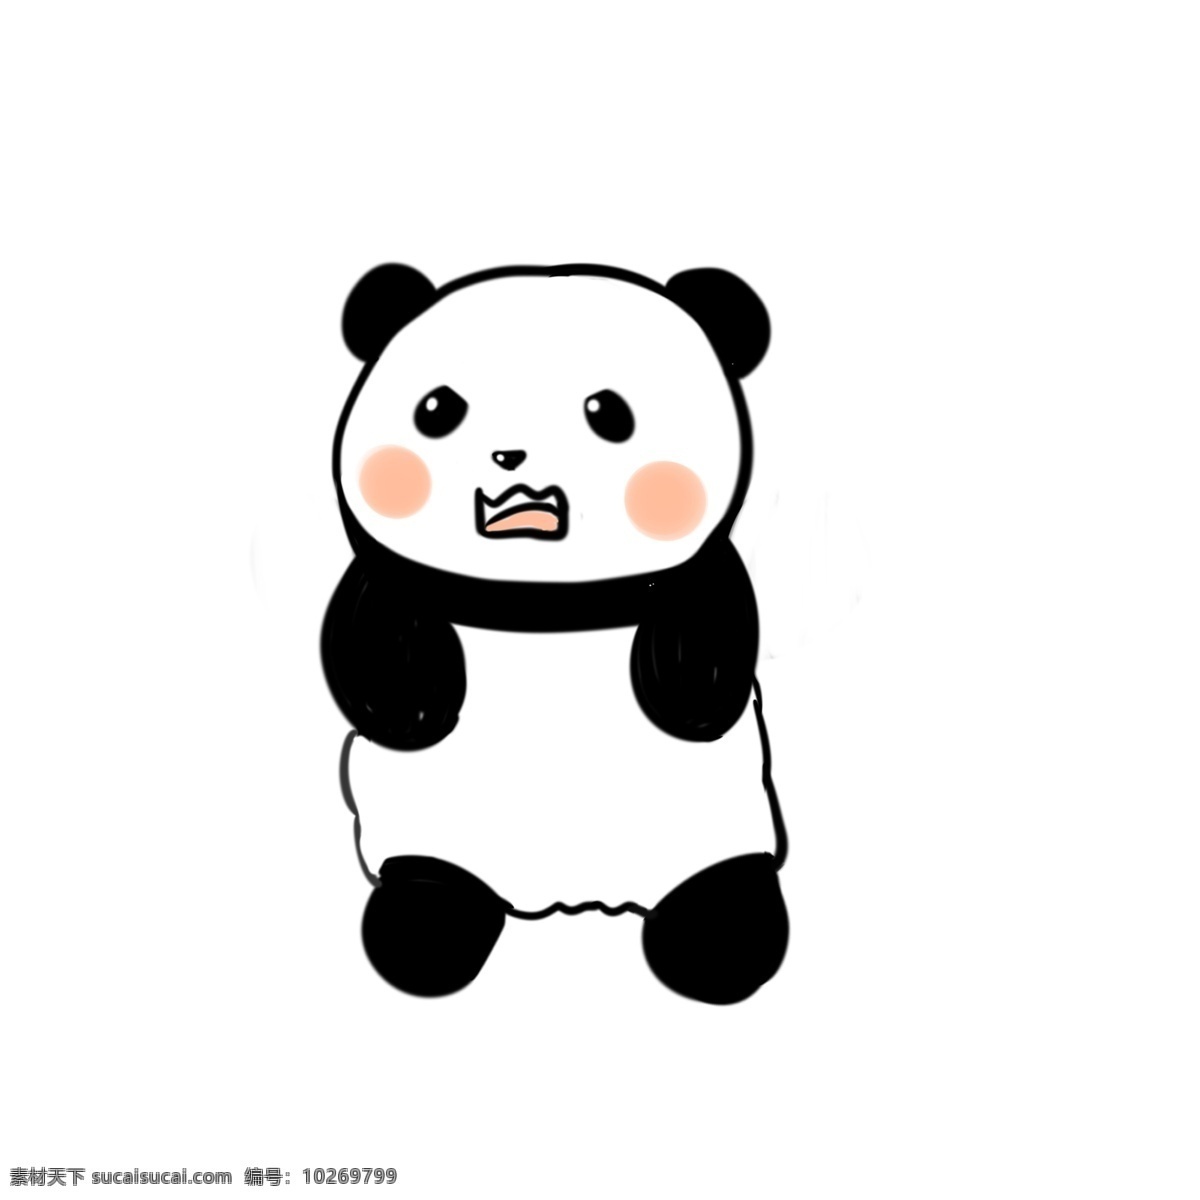 原创 可爱 熊猫 生气 表情 包 表情包 萌